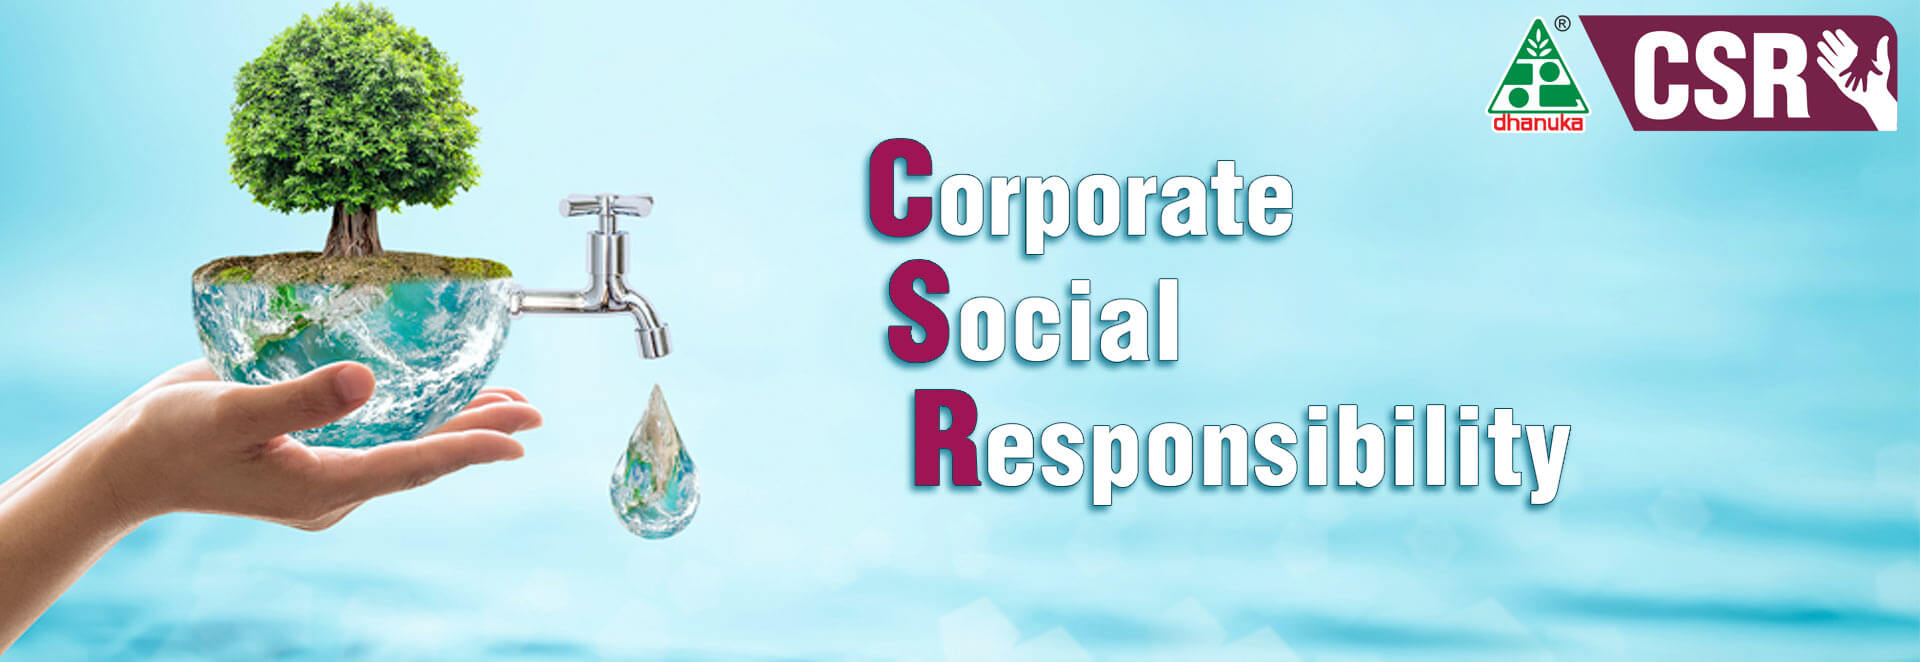 CSR desktop banner section 1 image